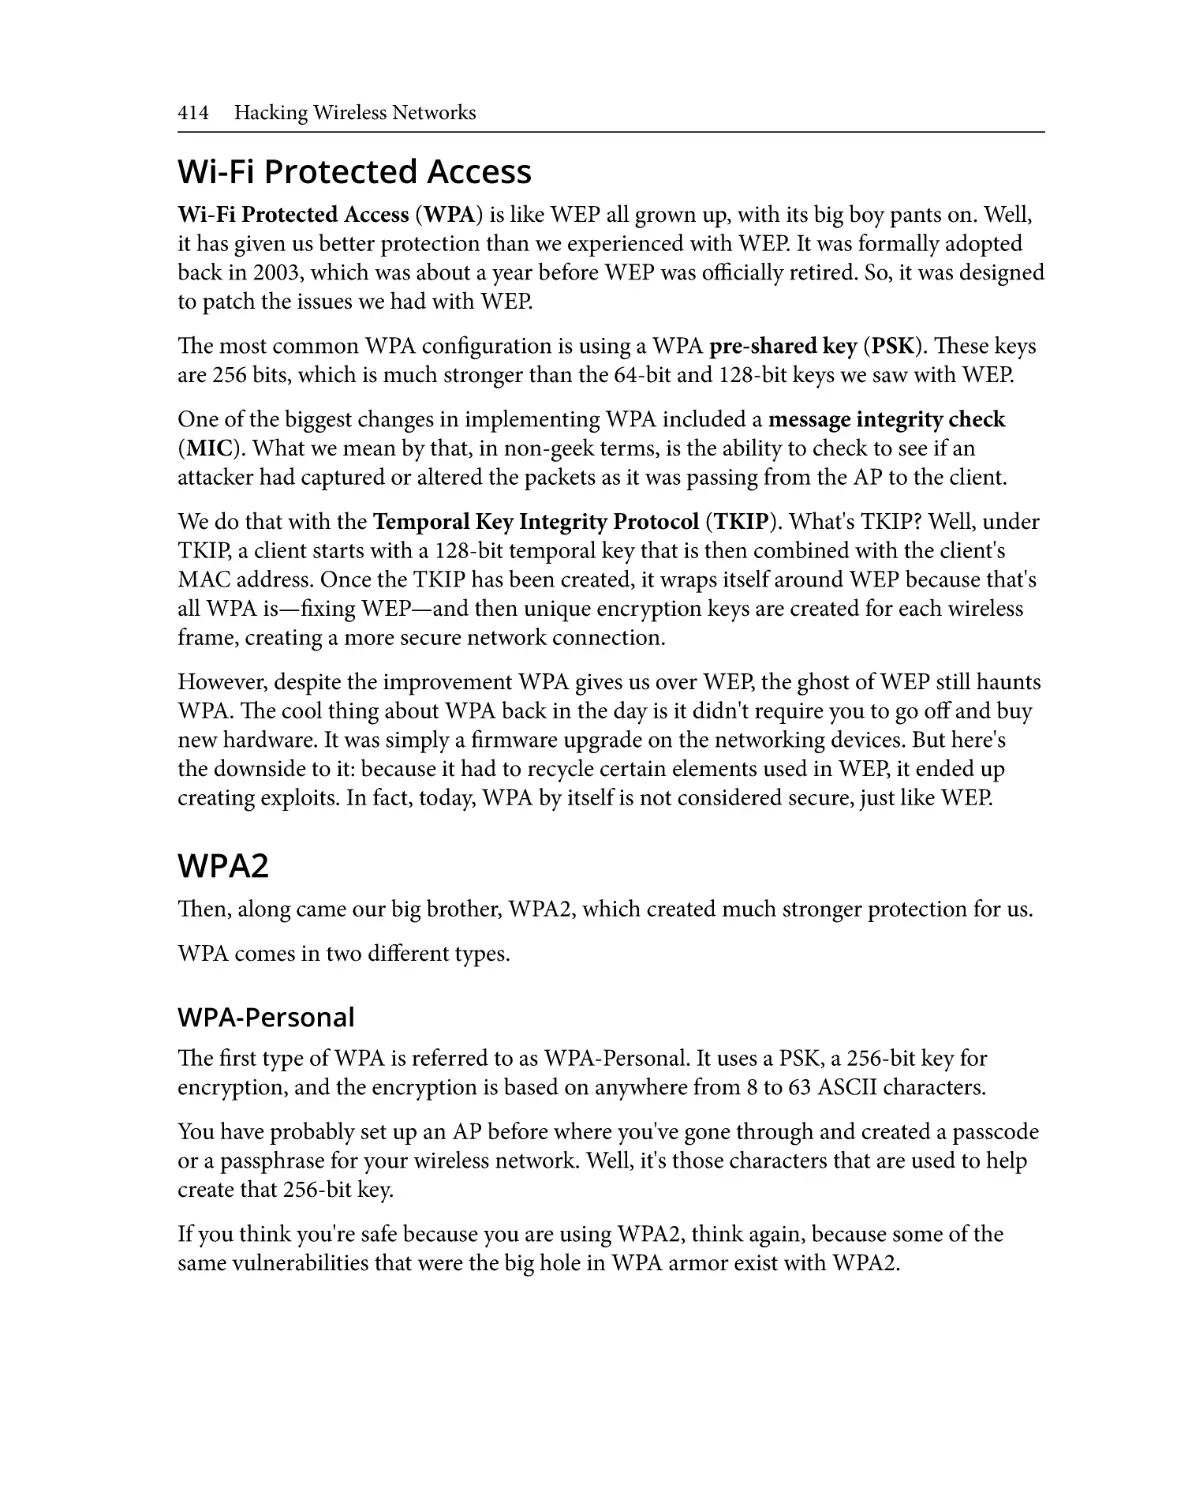 Wi-Fi Protected Access
WPA2